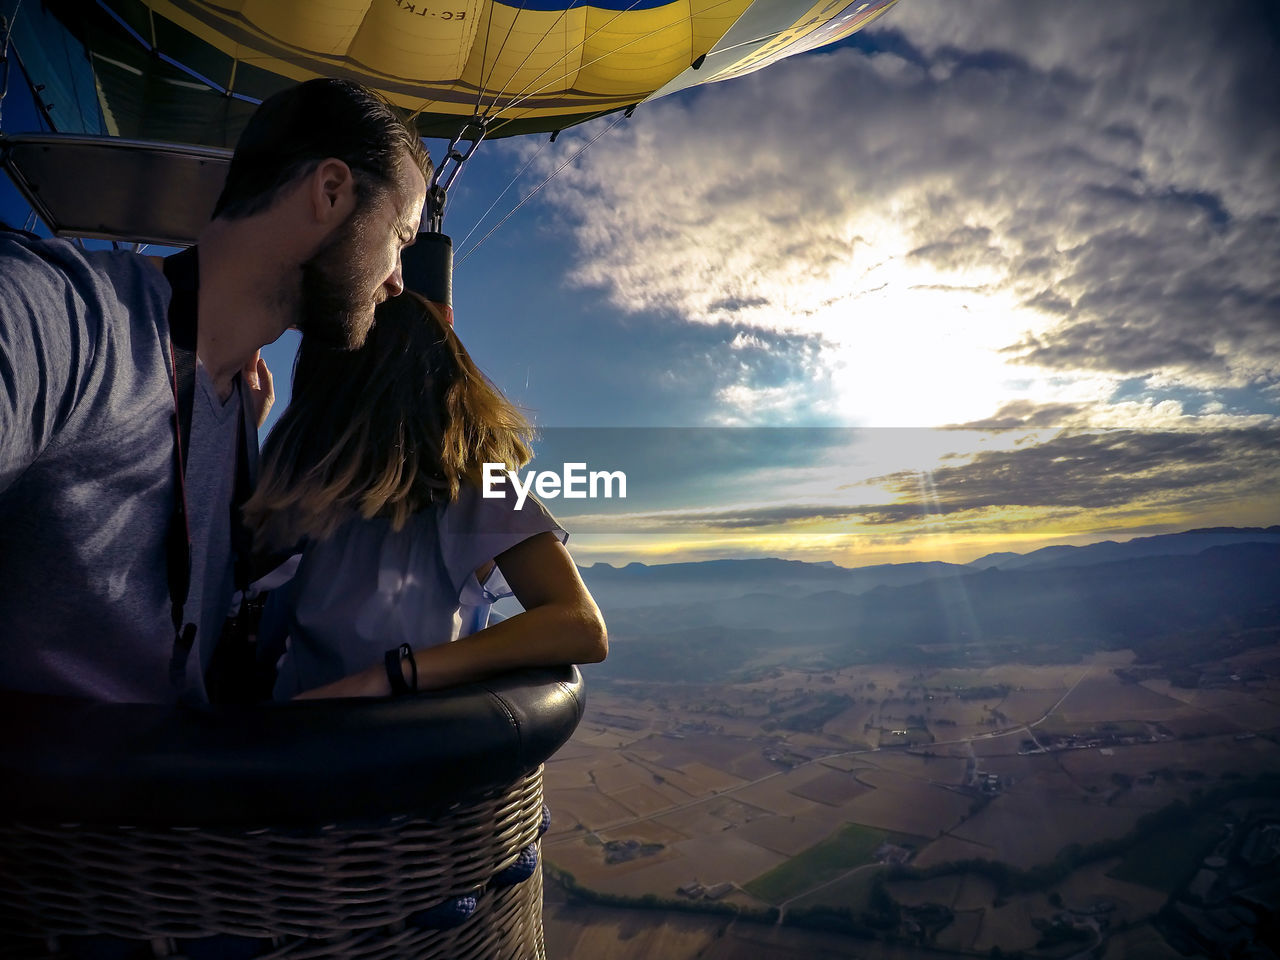 Couple in hot air balloon